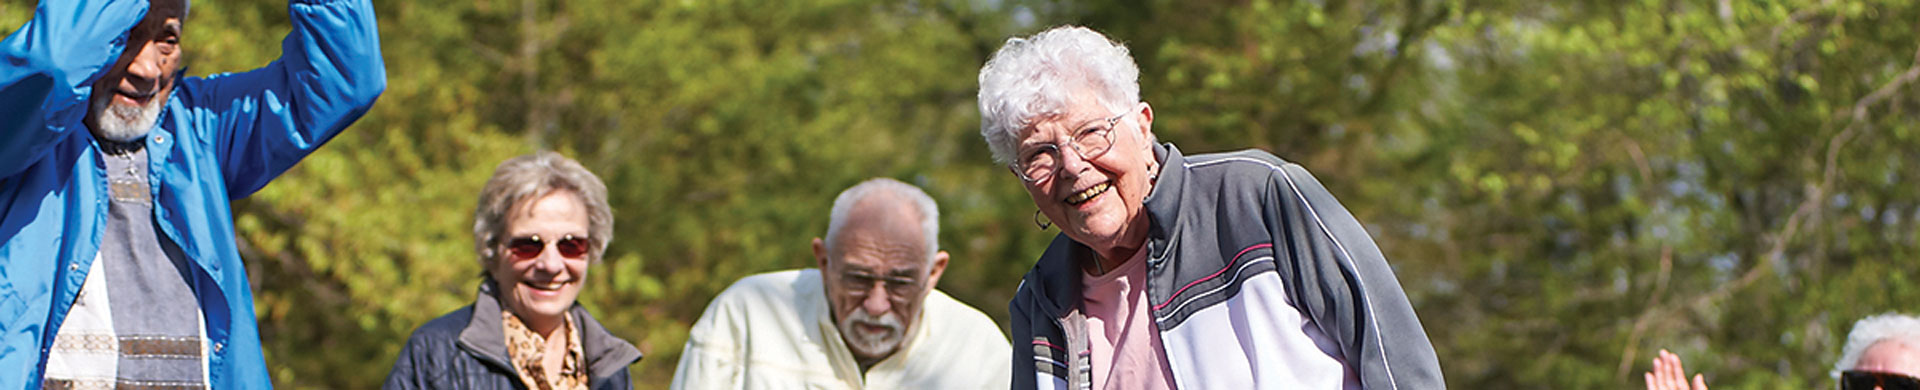 Seniors smiling outdoors